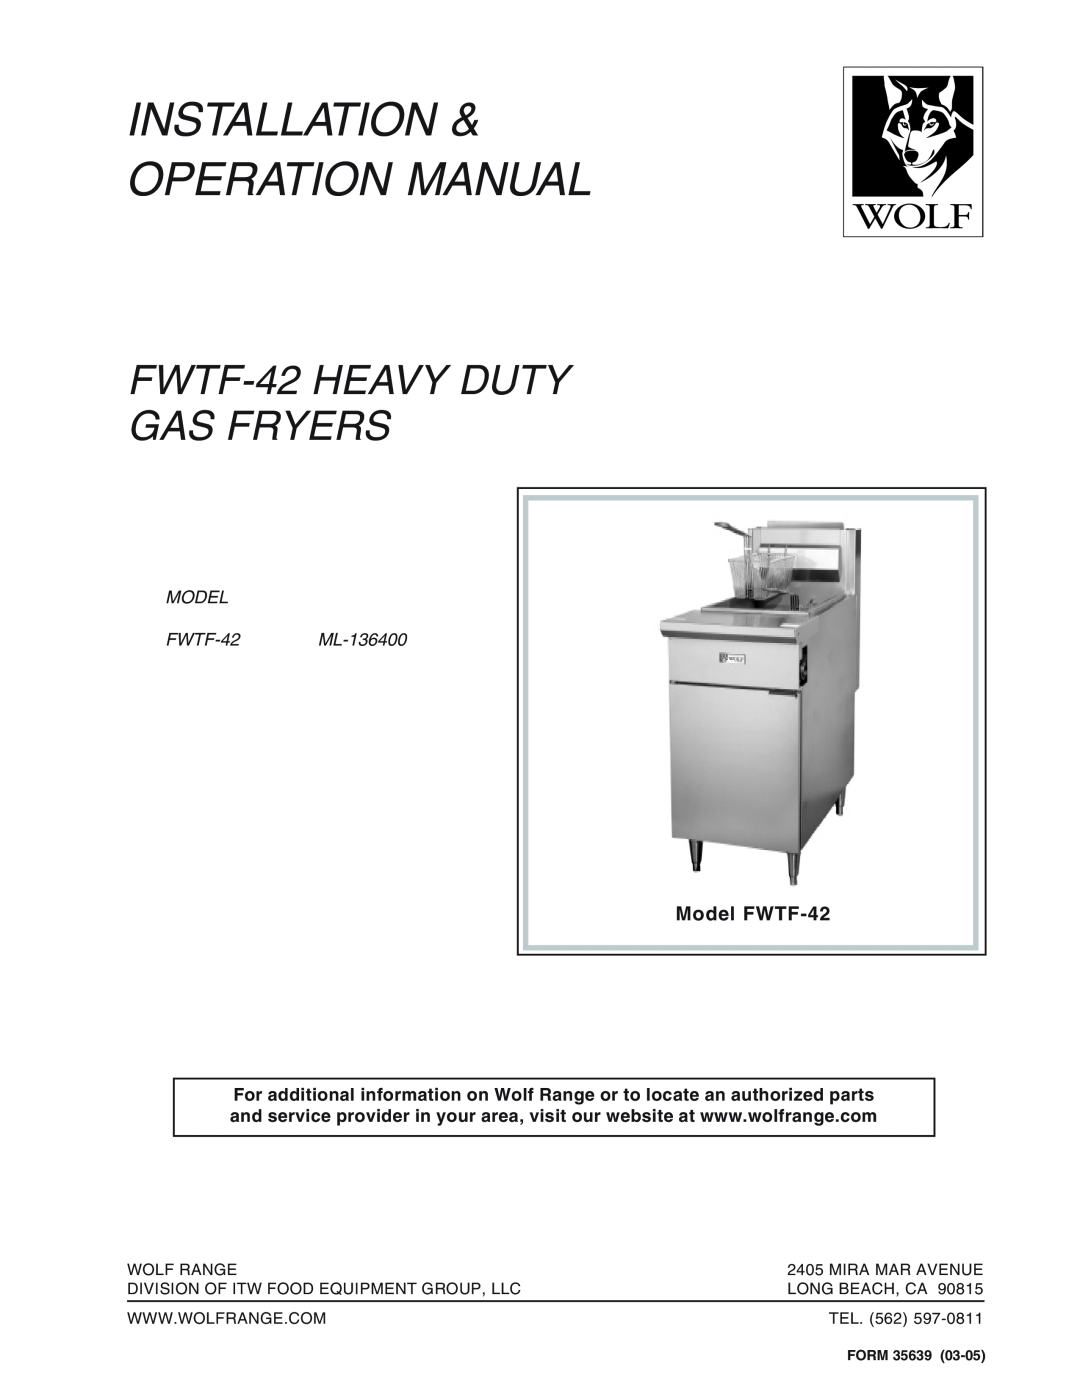 Wolf operation manual Model FWTF-42, Installation Operation Manual, FWTF-42 HEAVY DUTY GAS FRYERS, Wolf Range, TEL. 562 